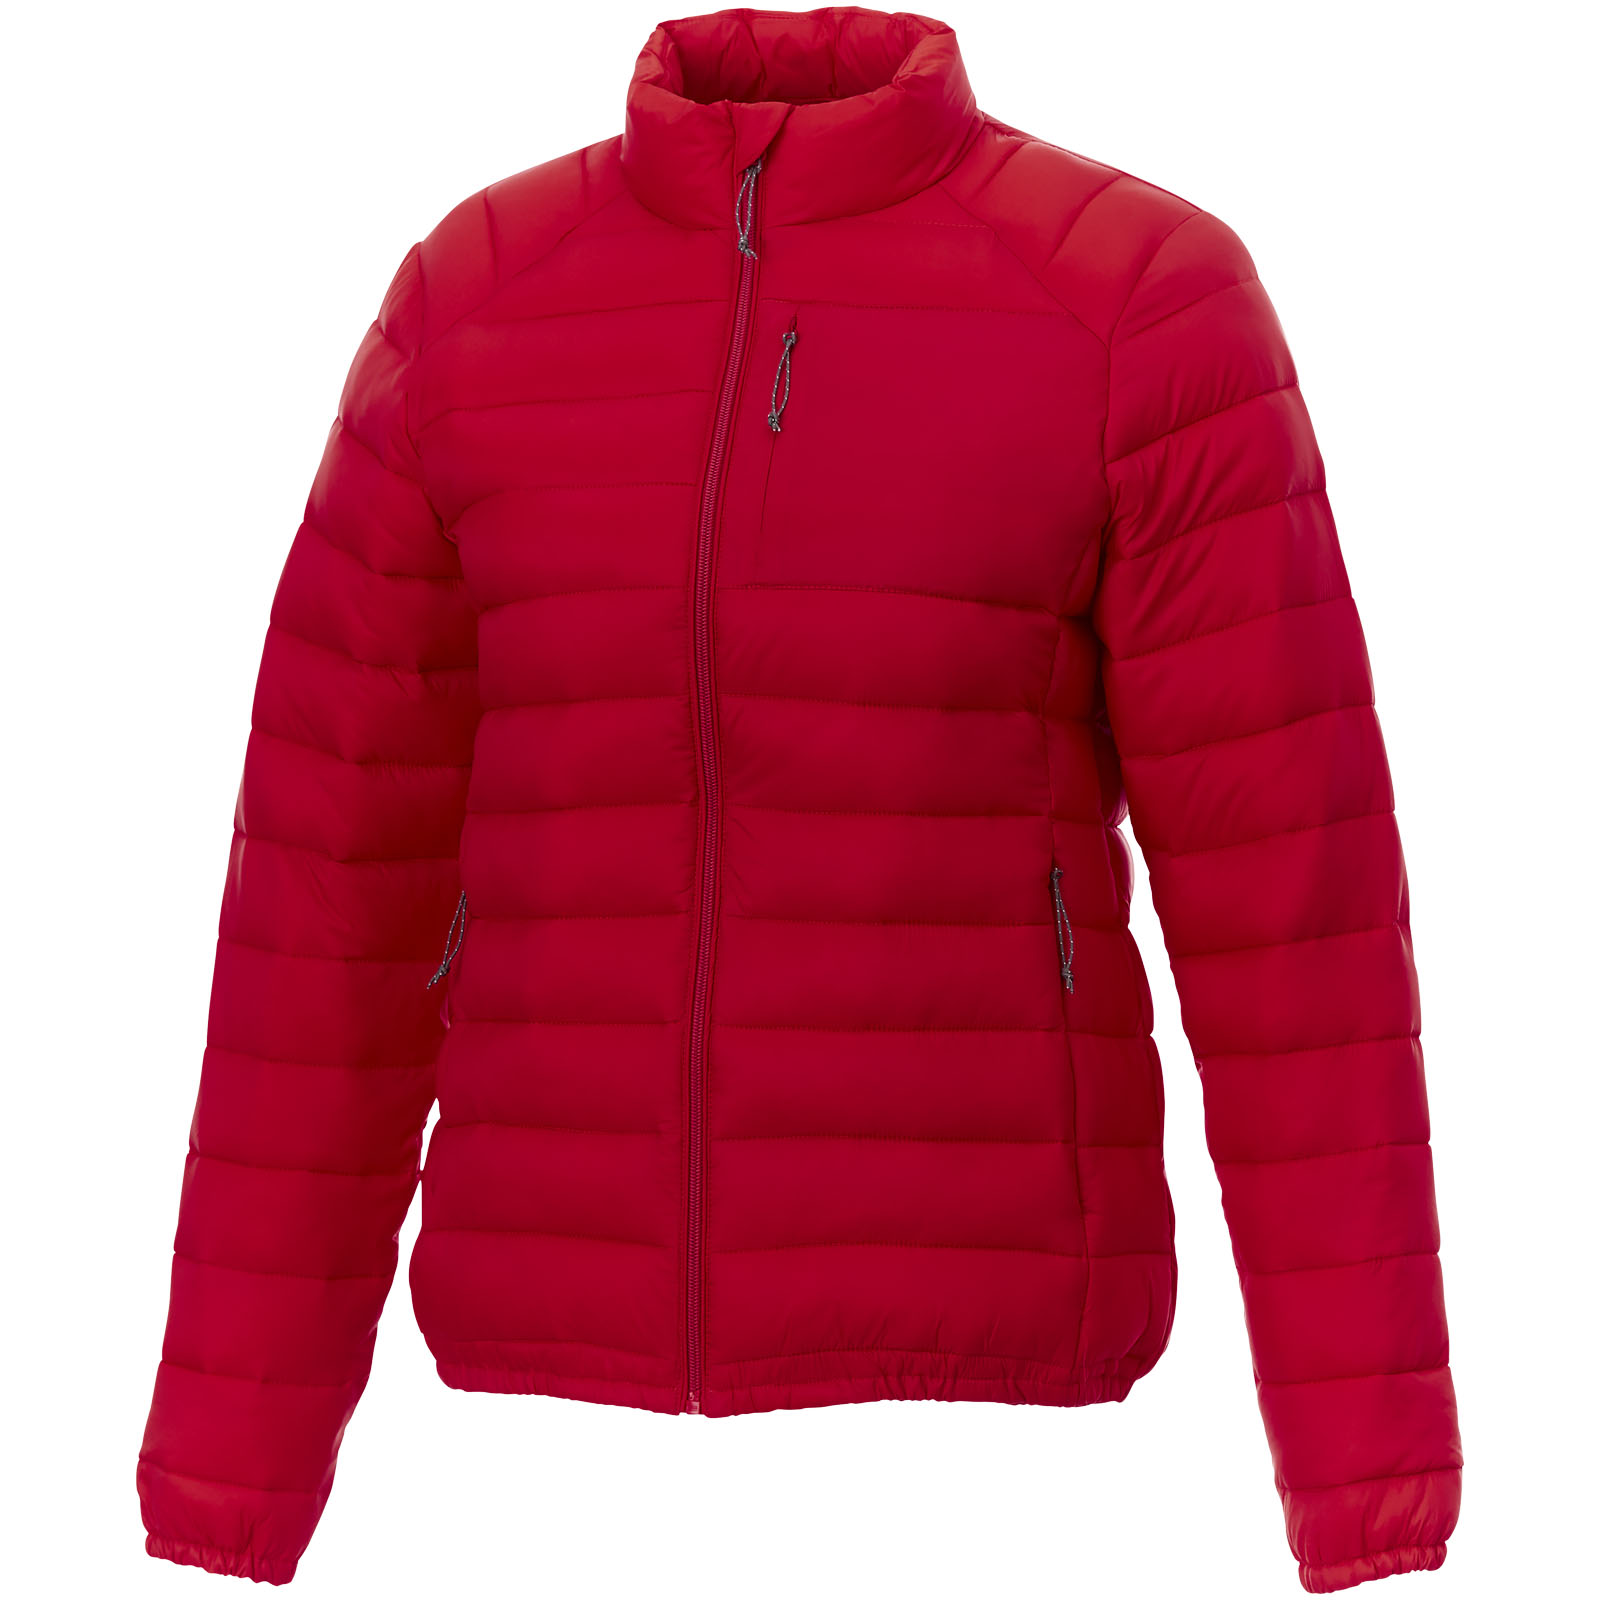 Jackets - Athenas women's insulated jacket